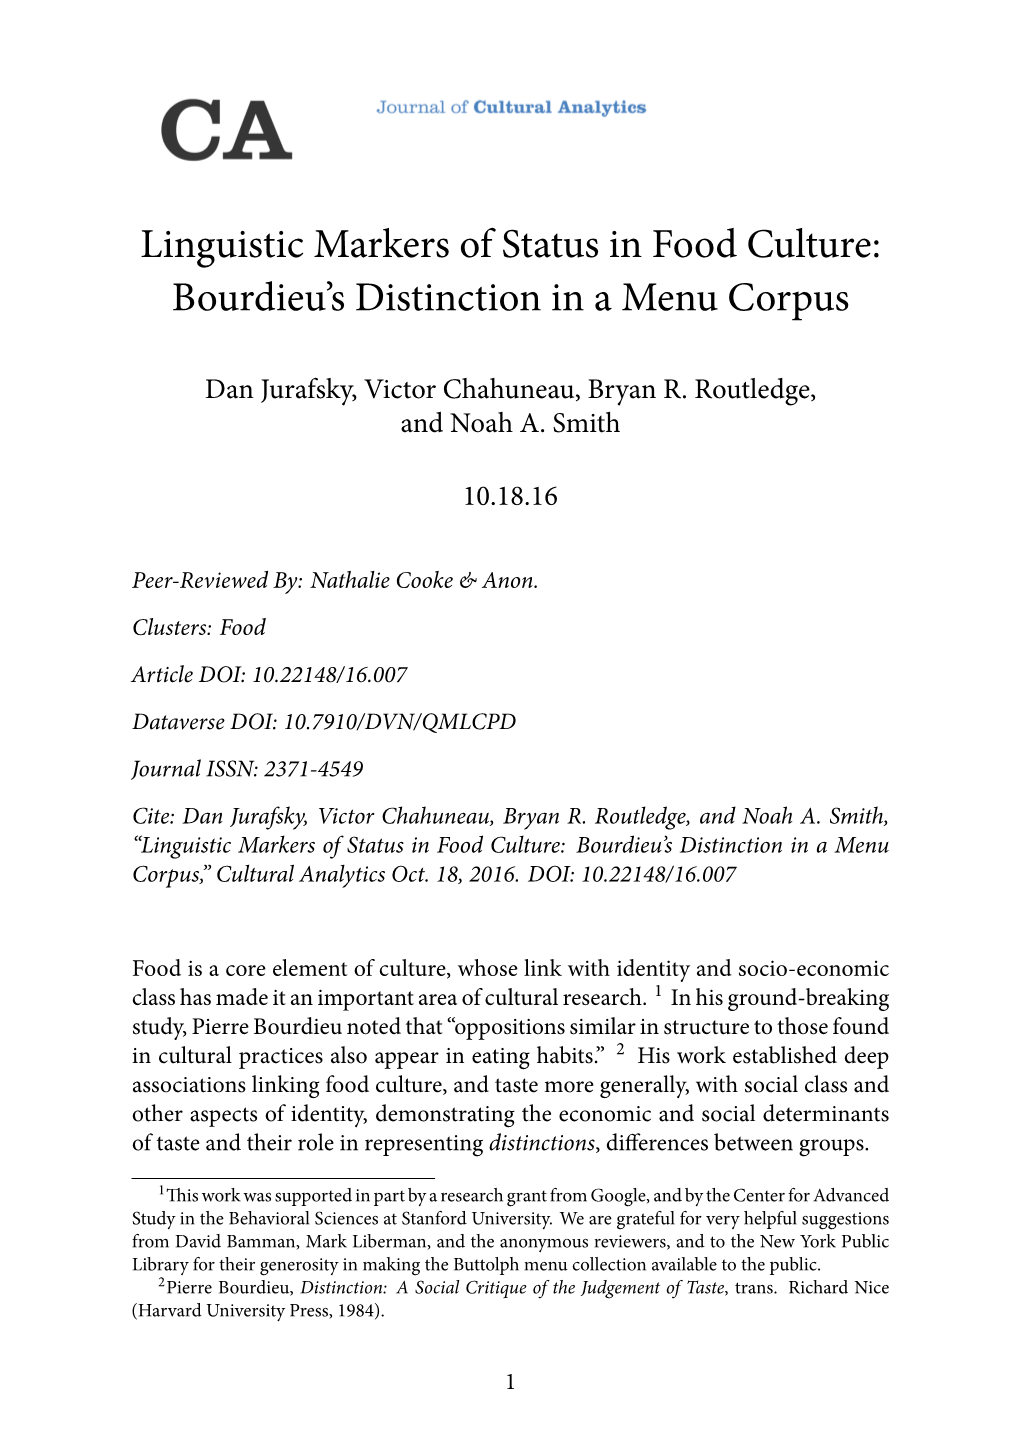 Linguistic Markers of Status in Food Culture: Bourdieu’S Distinction in a Menu Corpus